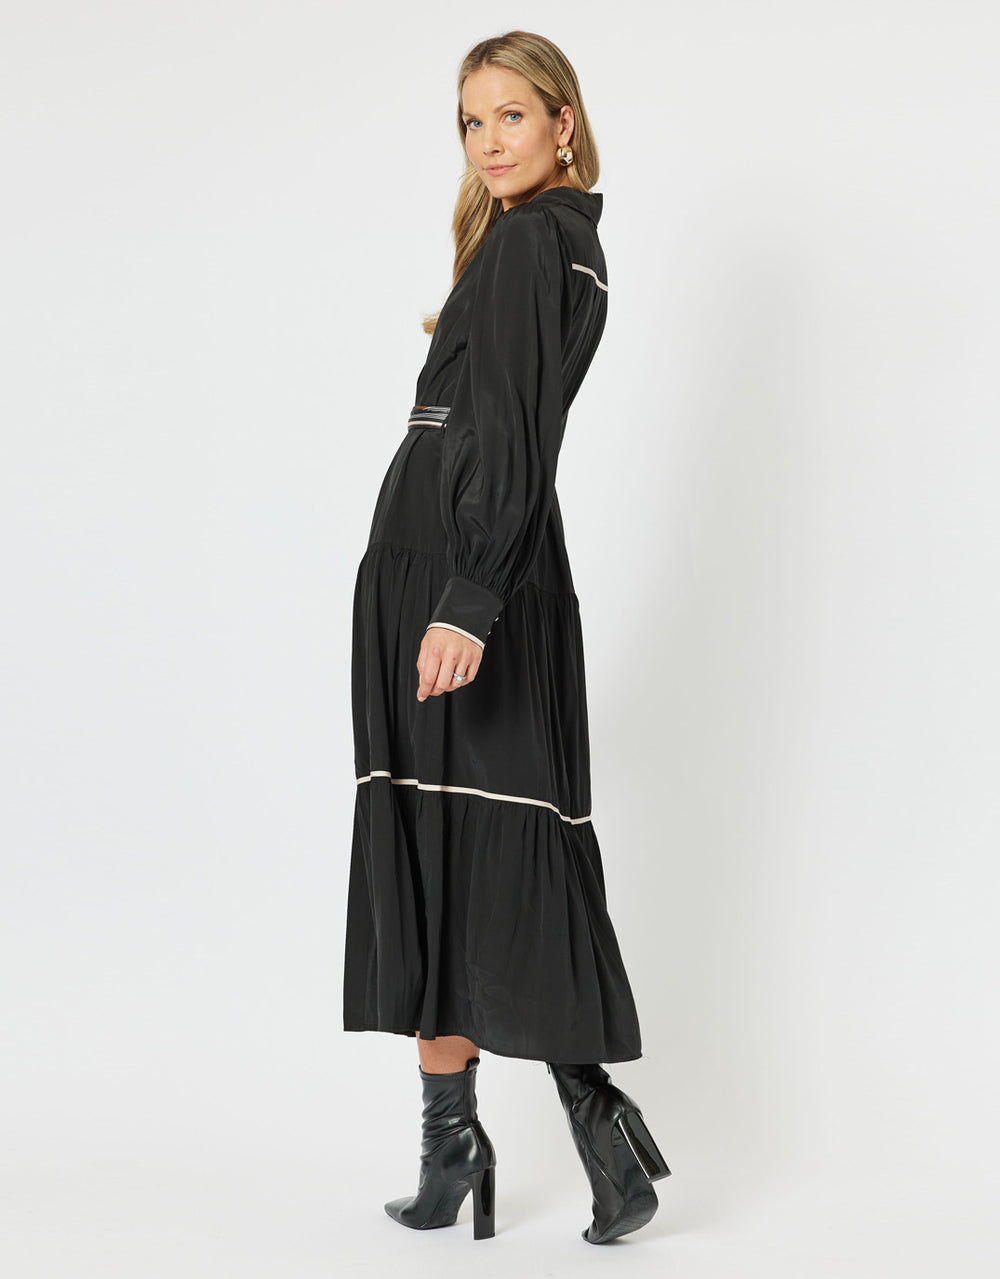 hammock-and-vine-roma-trim-dress-with-scarf-belt-black-womens-clothing